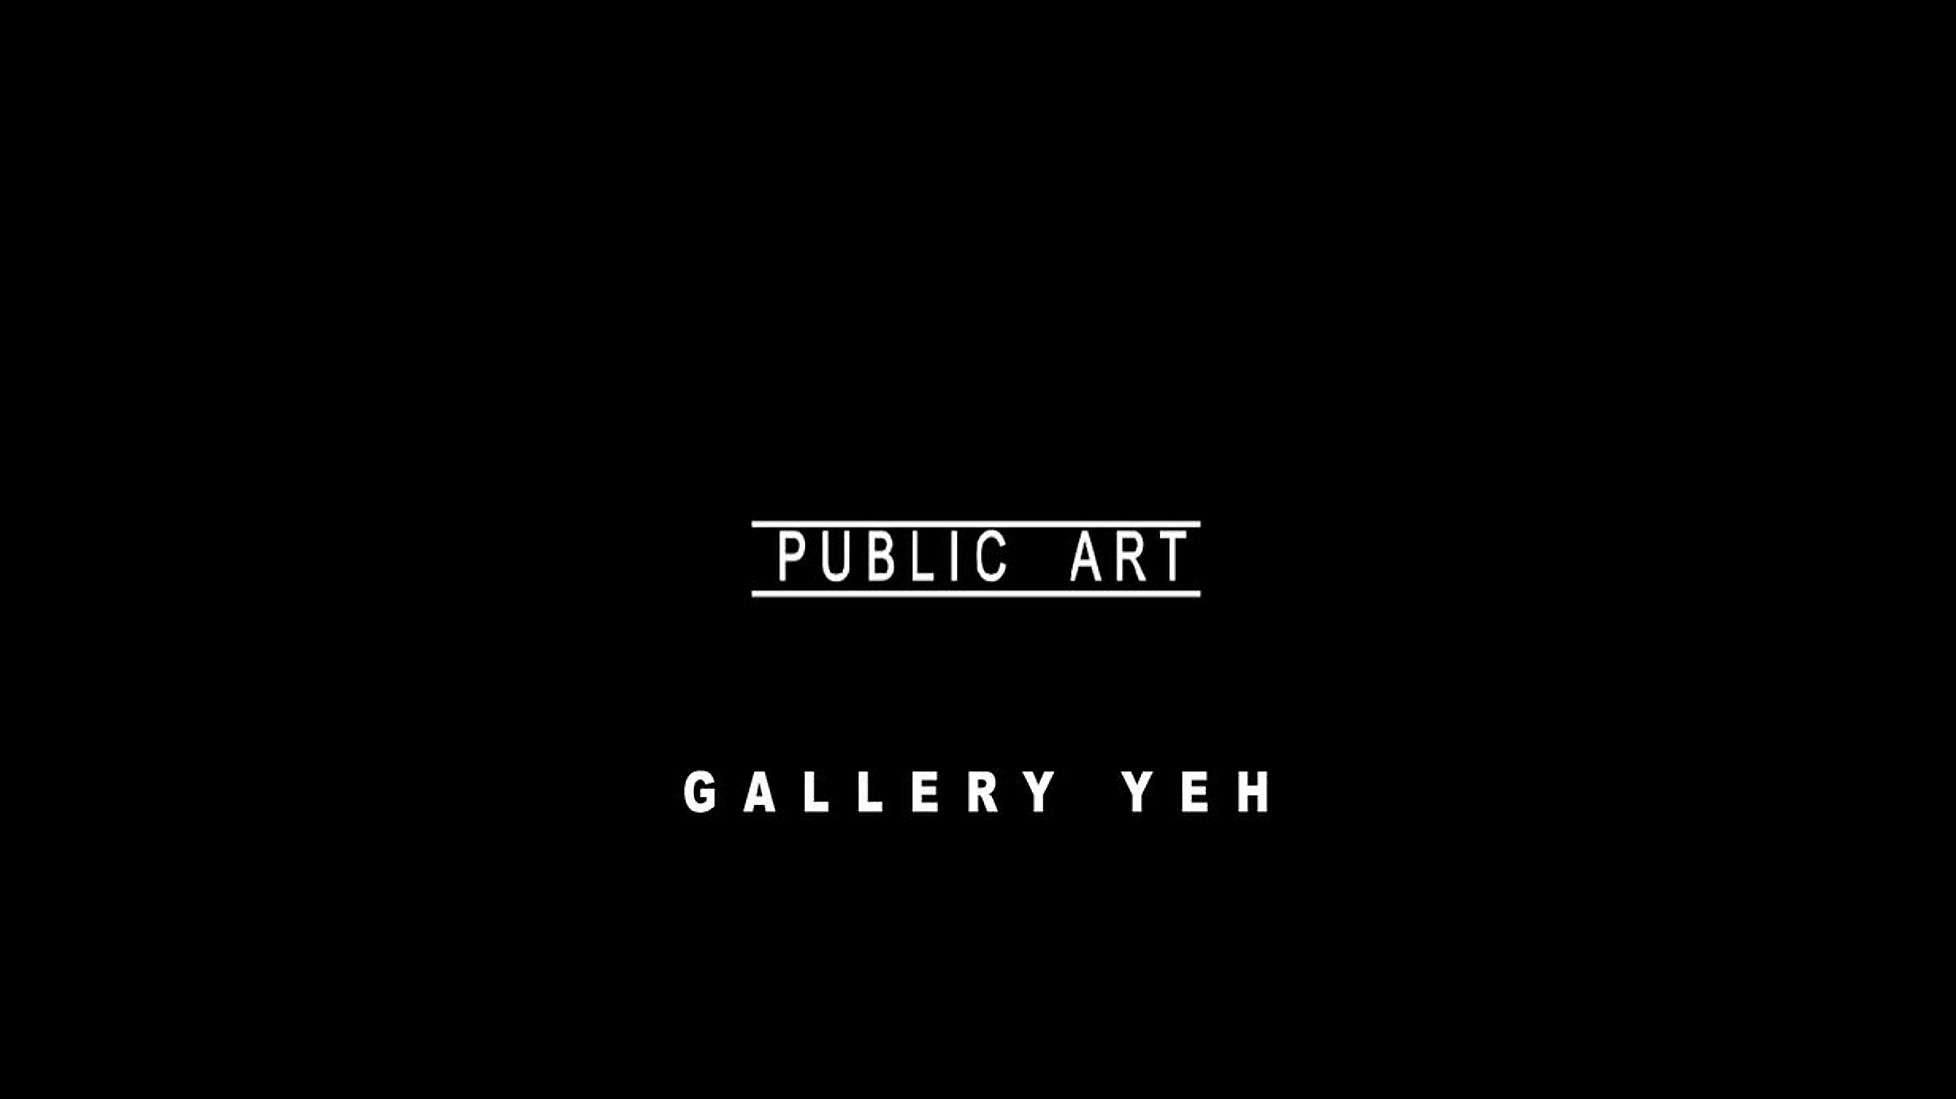 GALLERY YEH_PUBLIC ART